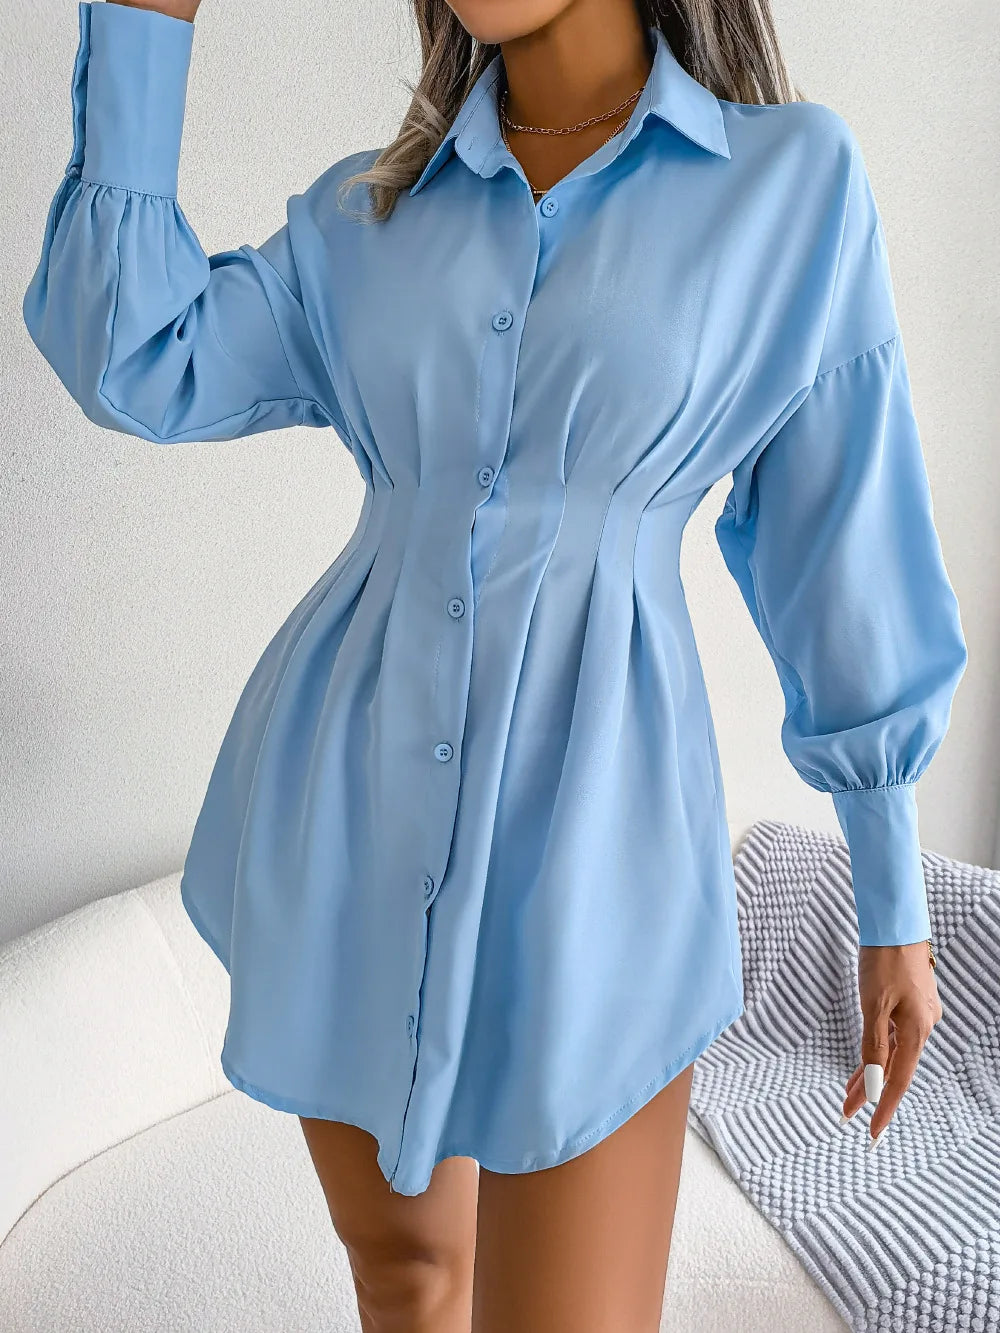 Casual Lantern Sleeves Tucked Waist Asymmetrical Shirt Dress Ladies Solid Color Stylish Elegant Button-Down Shirt Short Dresses